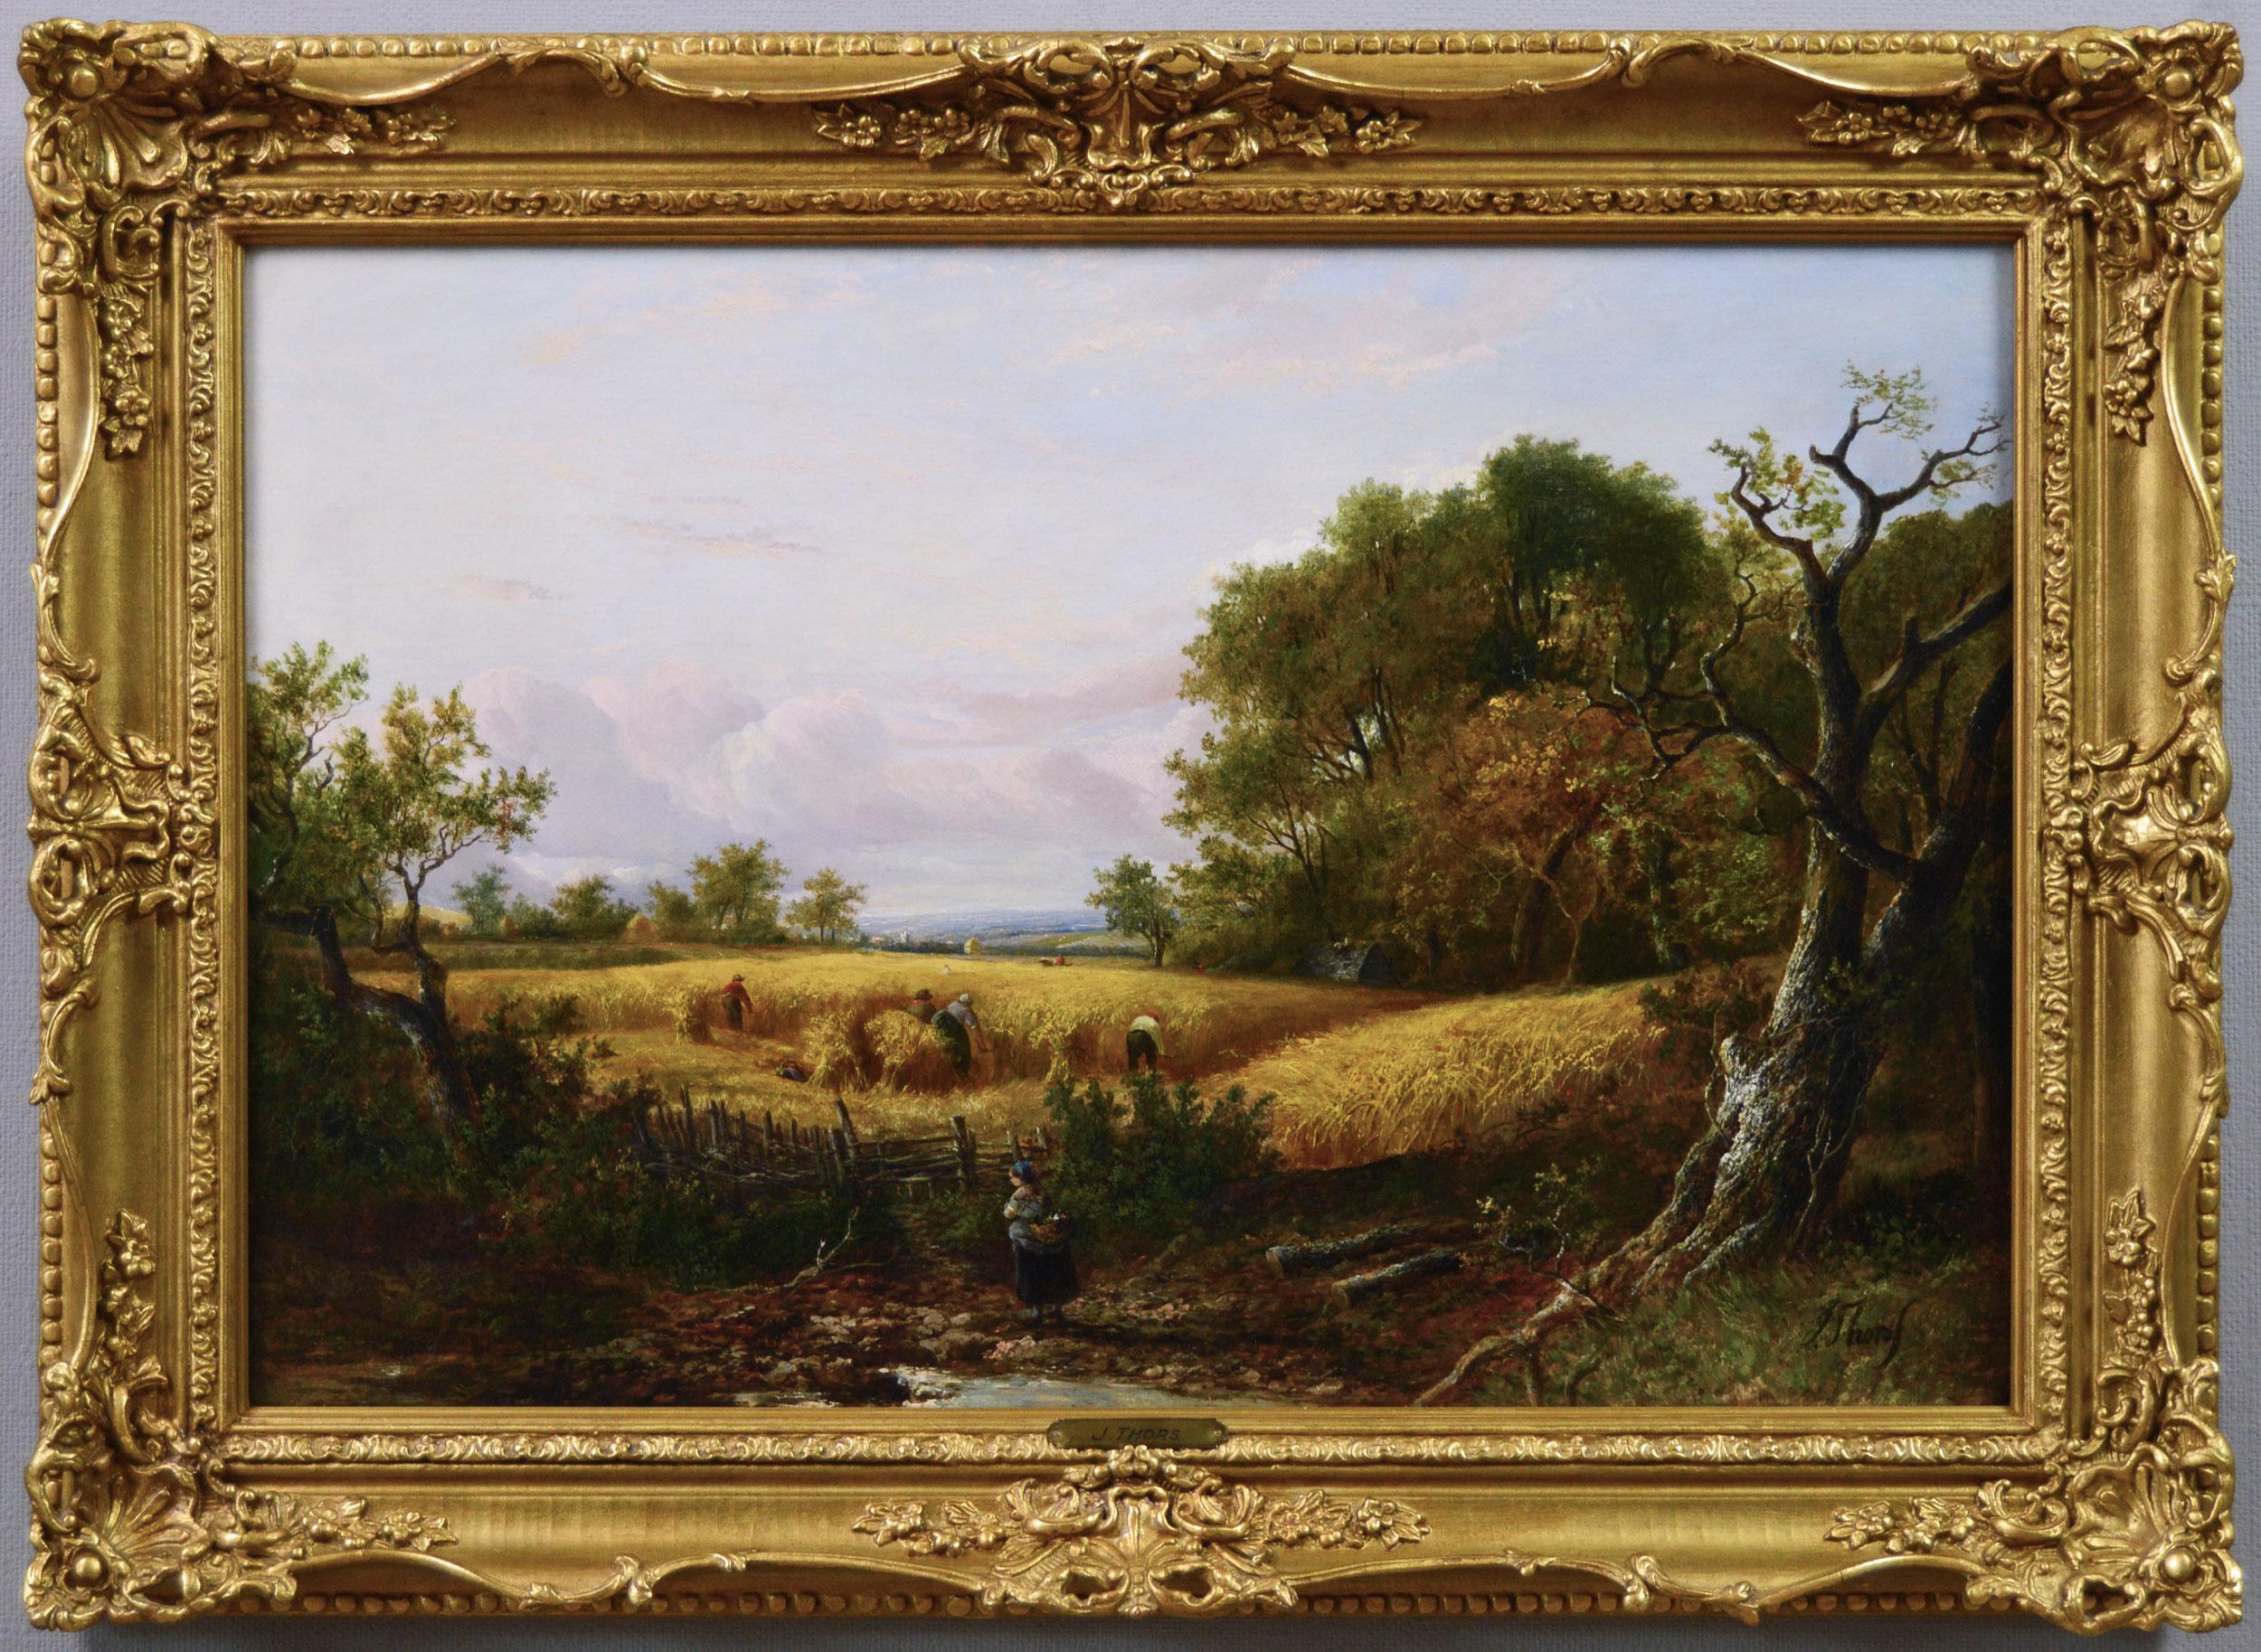 Joseph Thors Landscape Painting - 19th Century landscape oil painting of figures harvesting